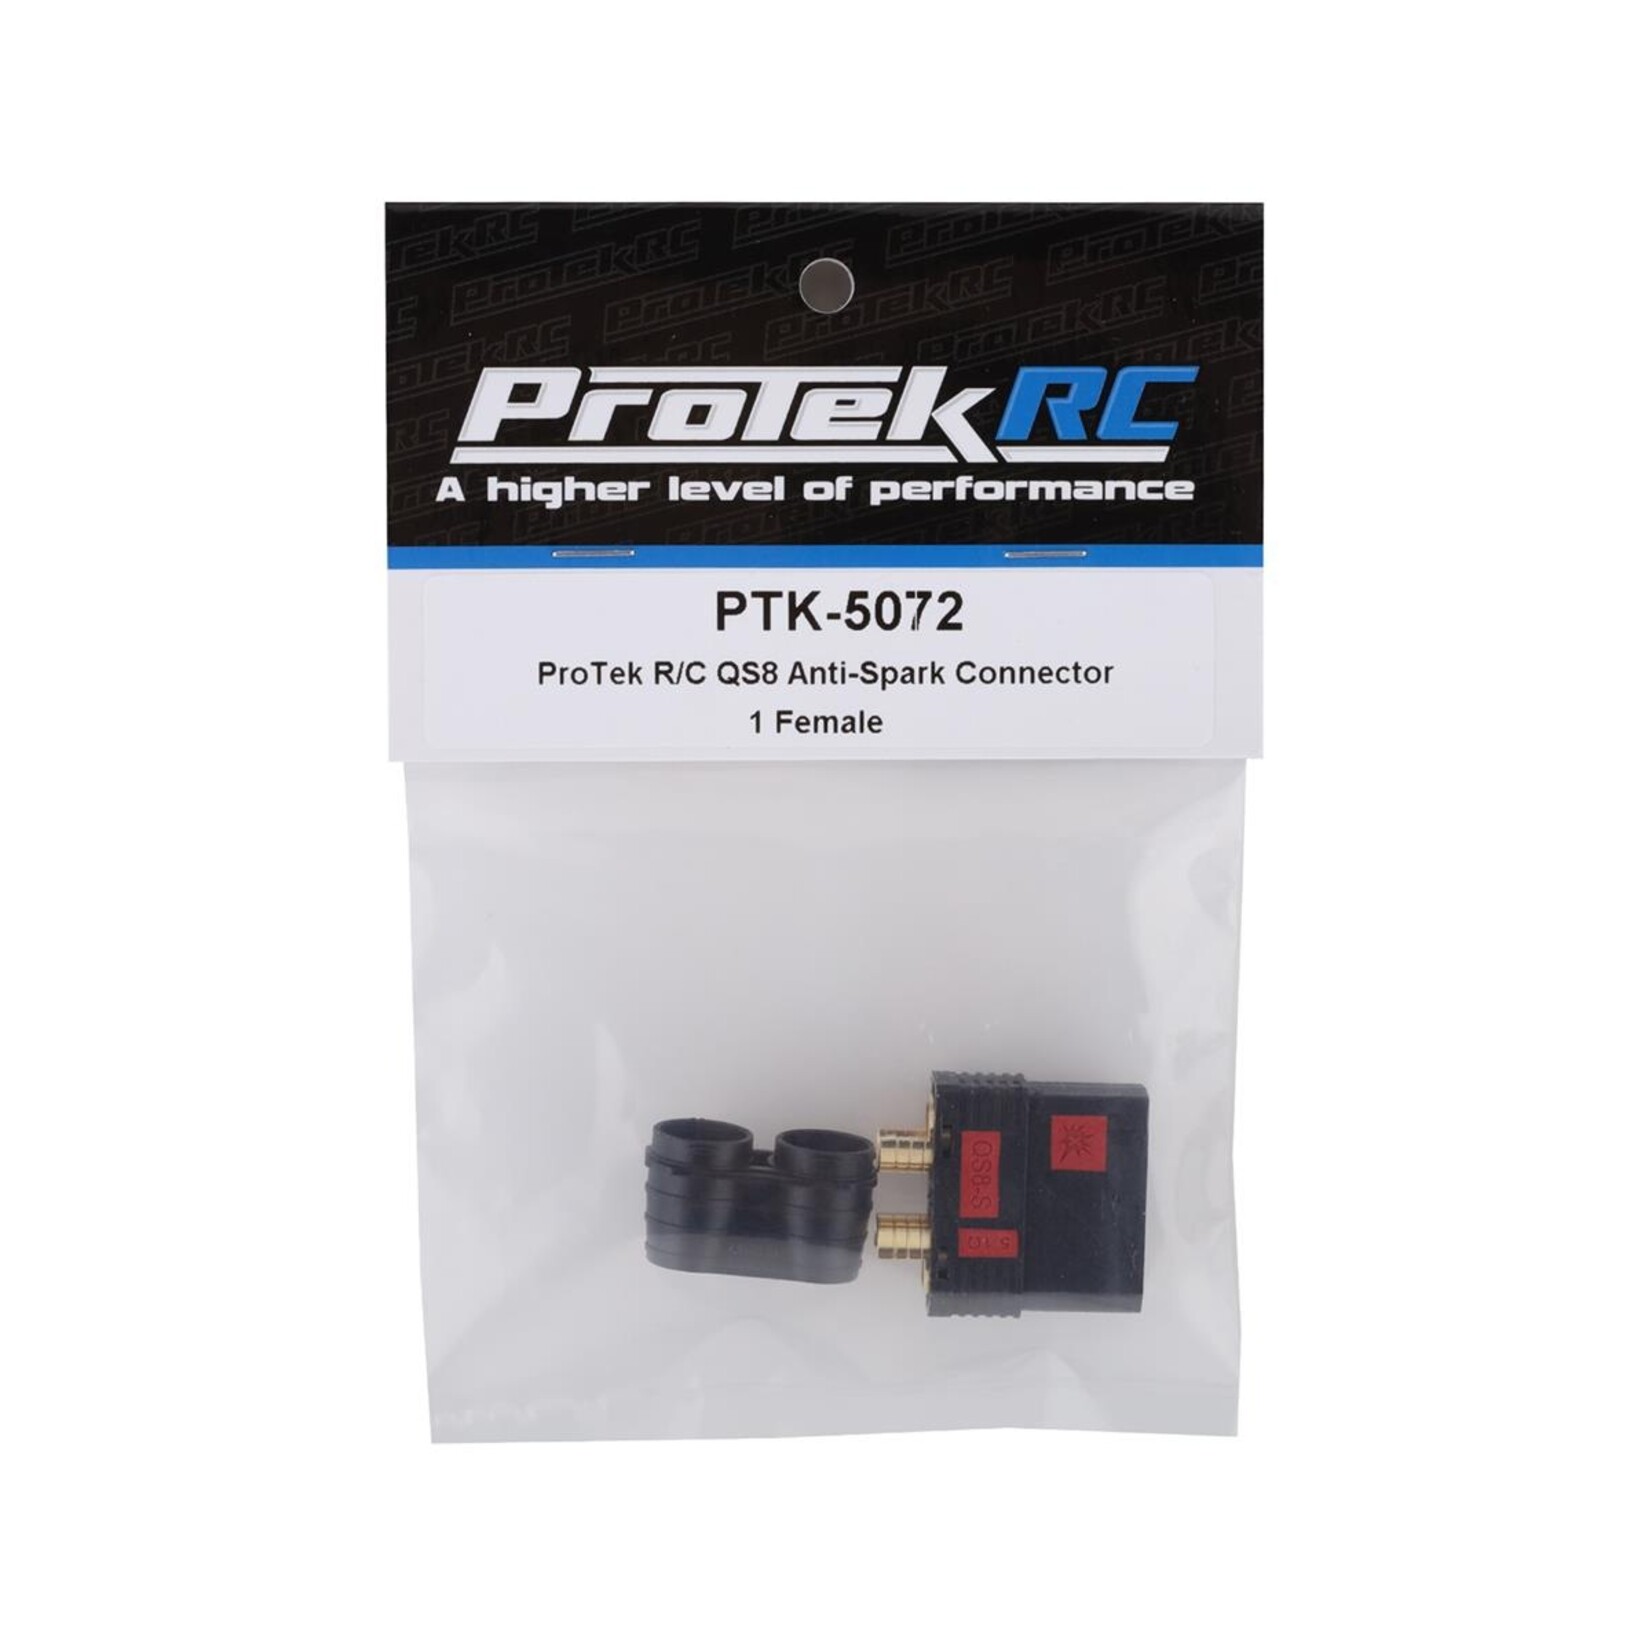 ProTek RC ProTek RC QS8 Anti-Spark Connector (1 Female) #PTK-5072